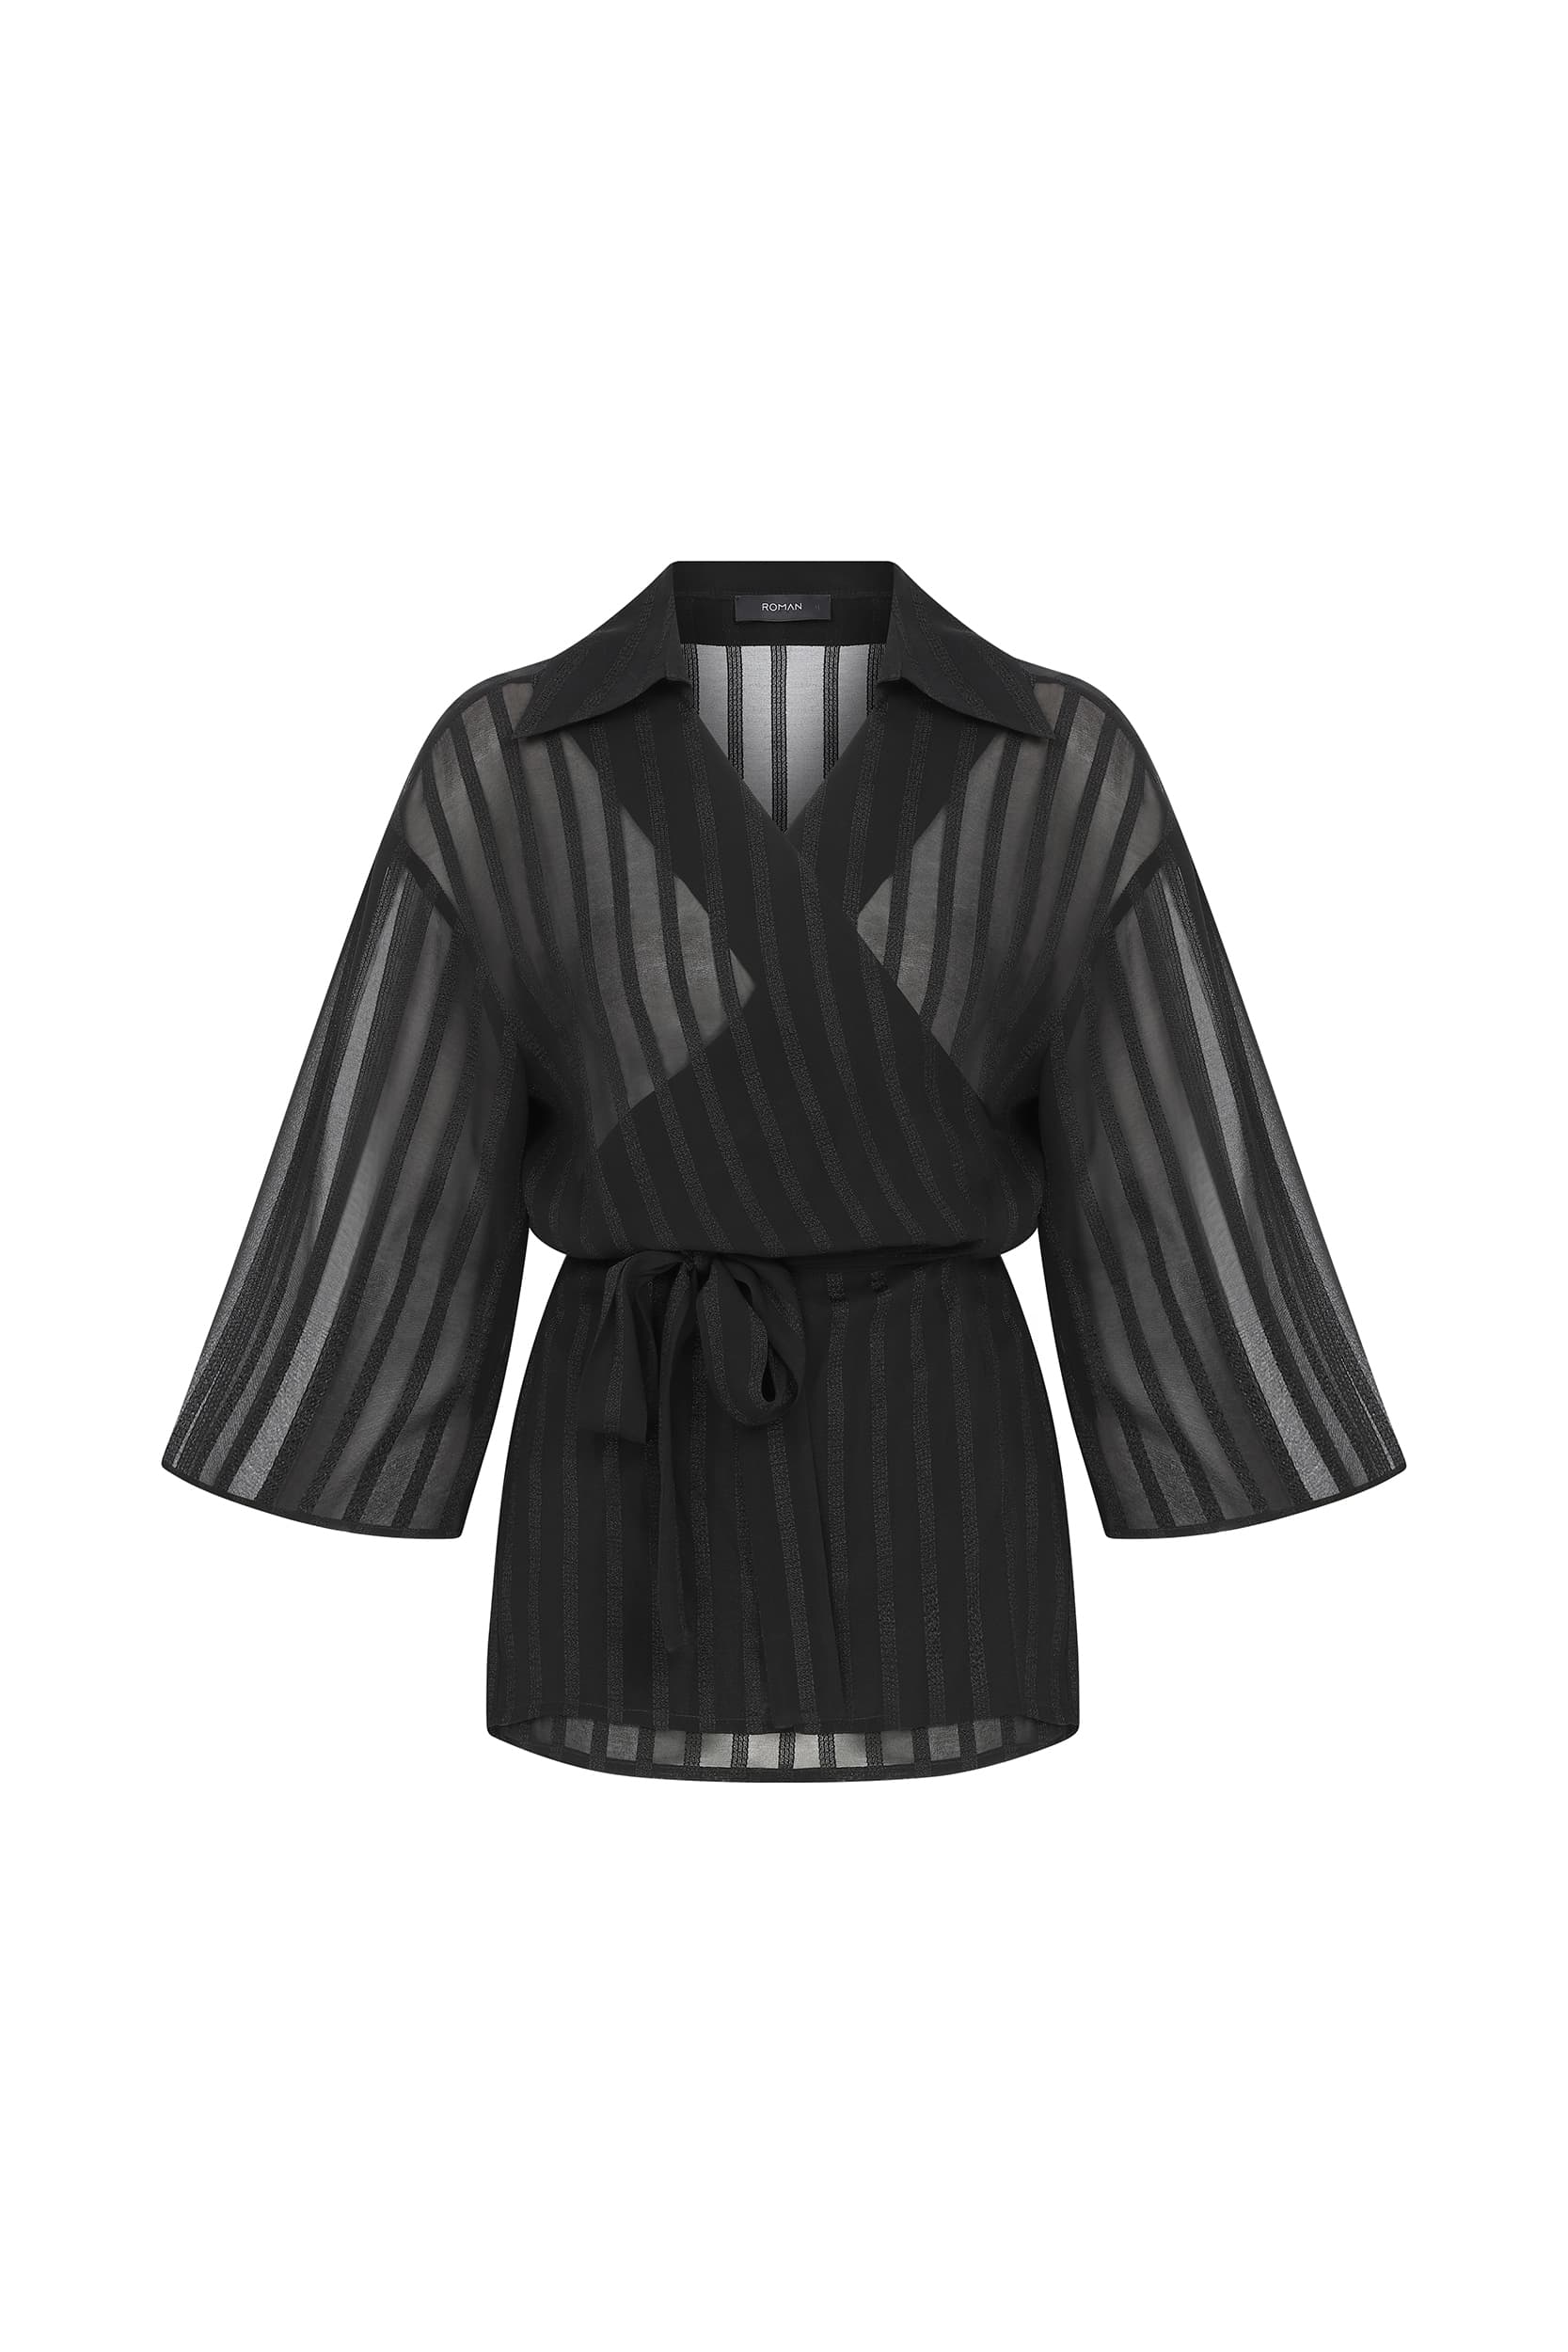 Kimono Sheer Black Women's Shirt --[BLACK]